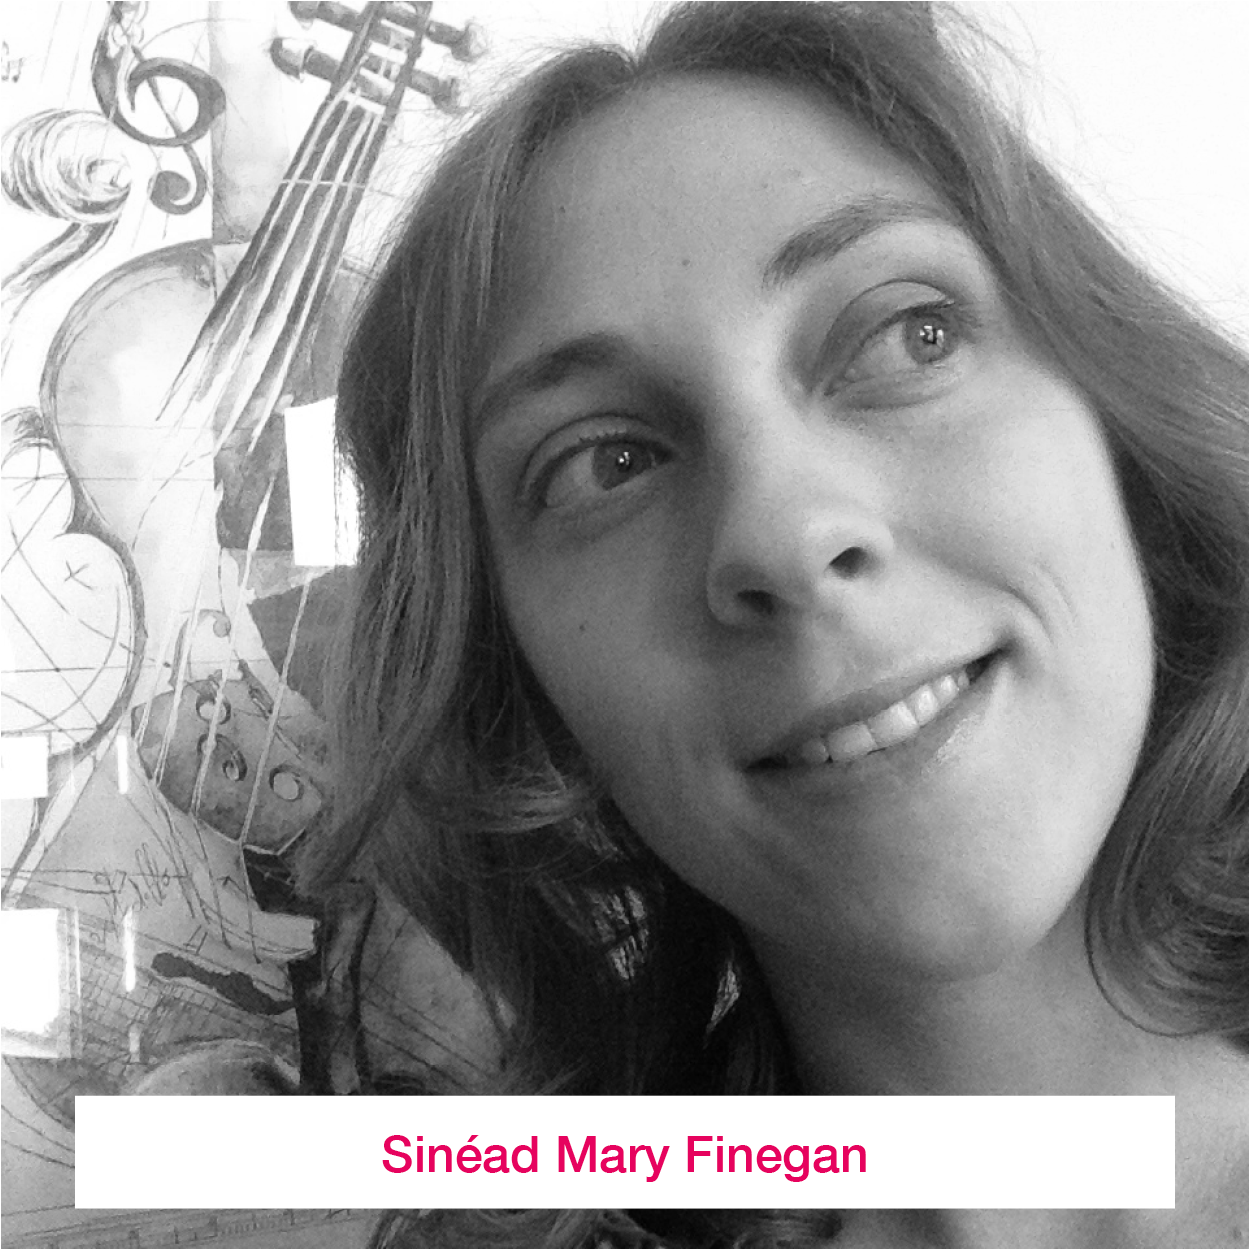 Sinead Mary Finegan